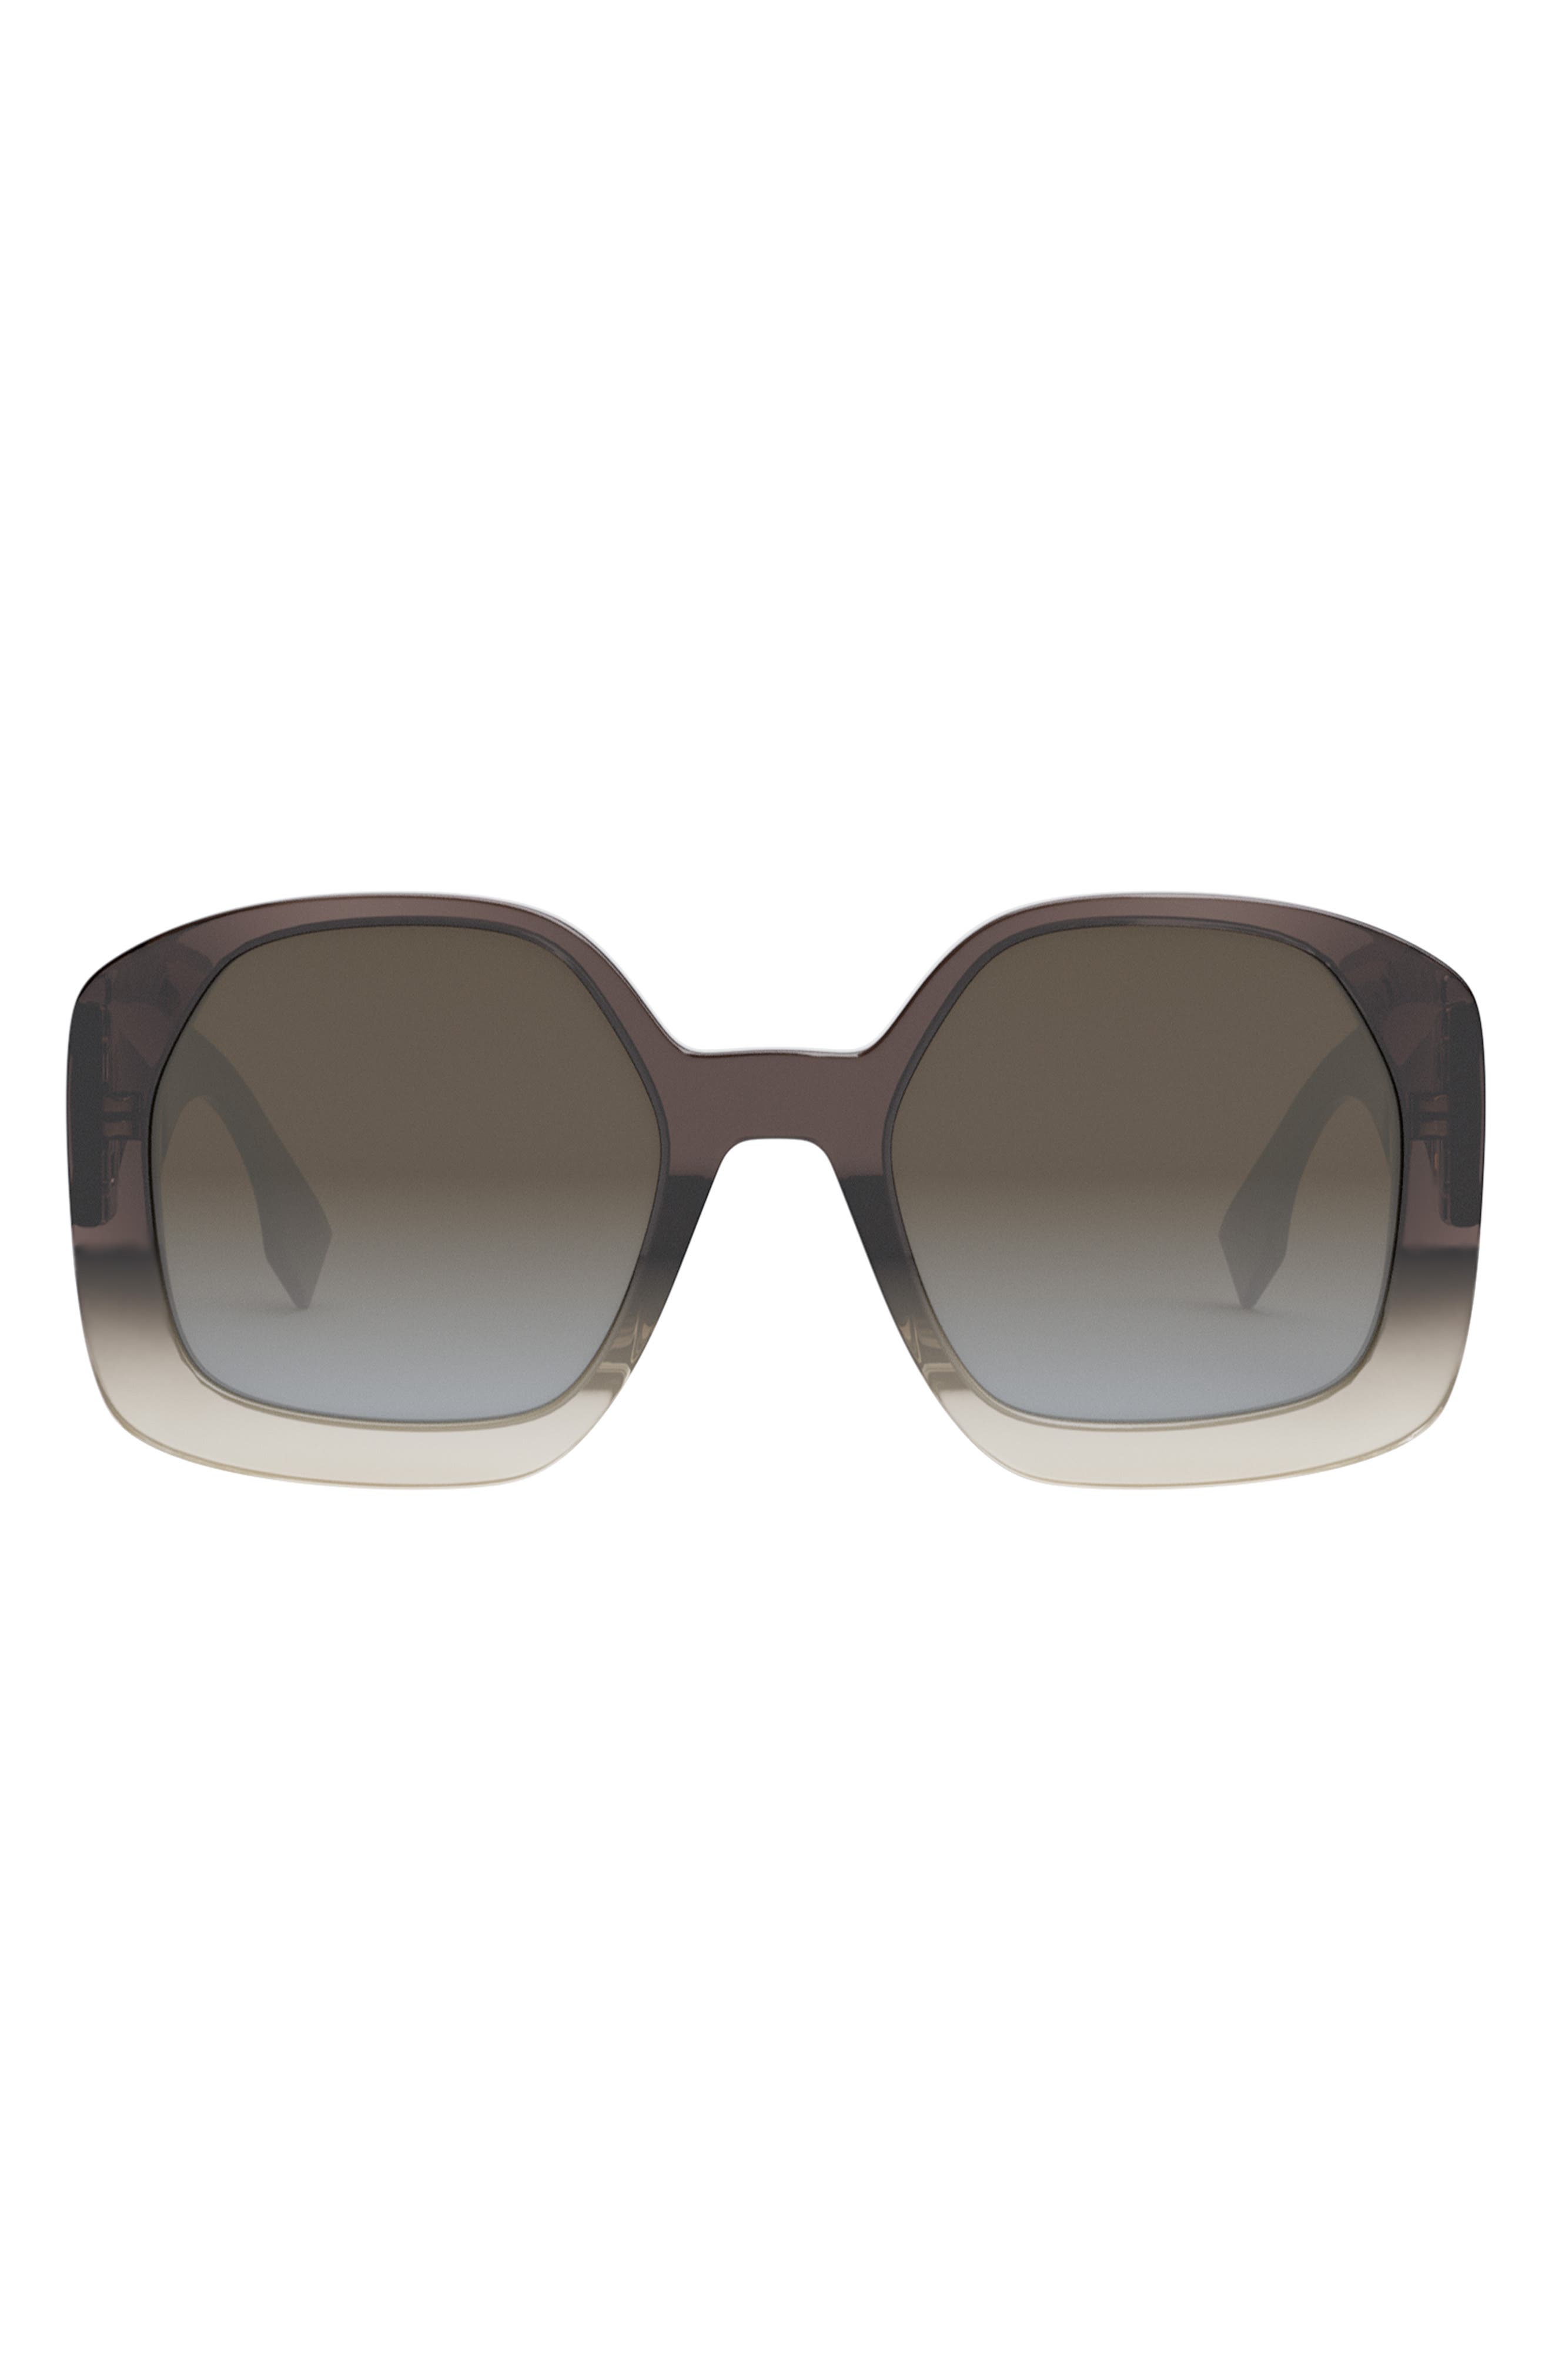 Fendi - O'Lock - Rectangular Sunglasses - Black - Sunglasses